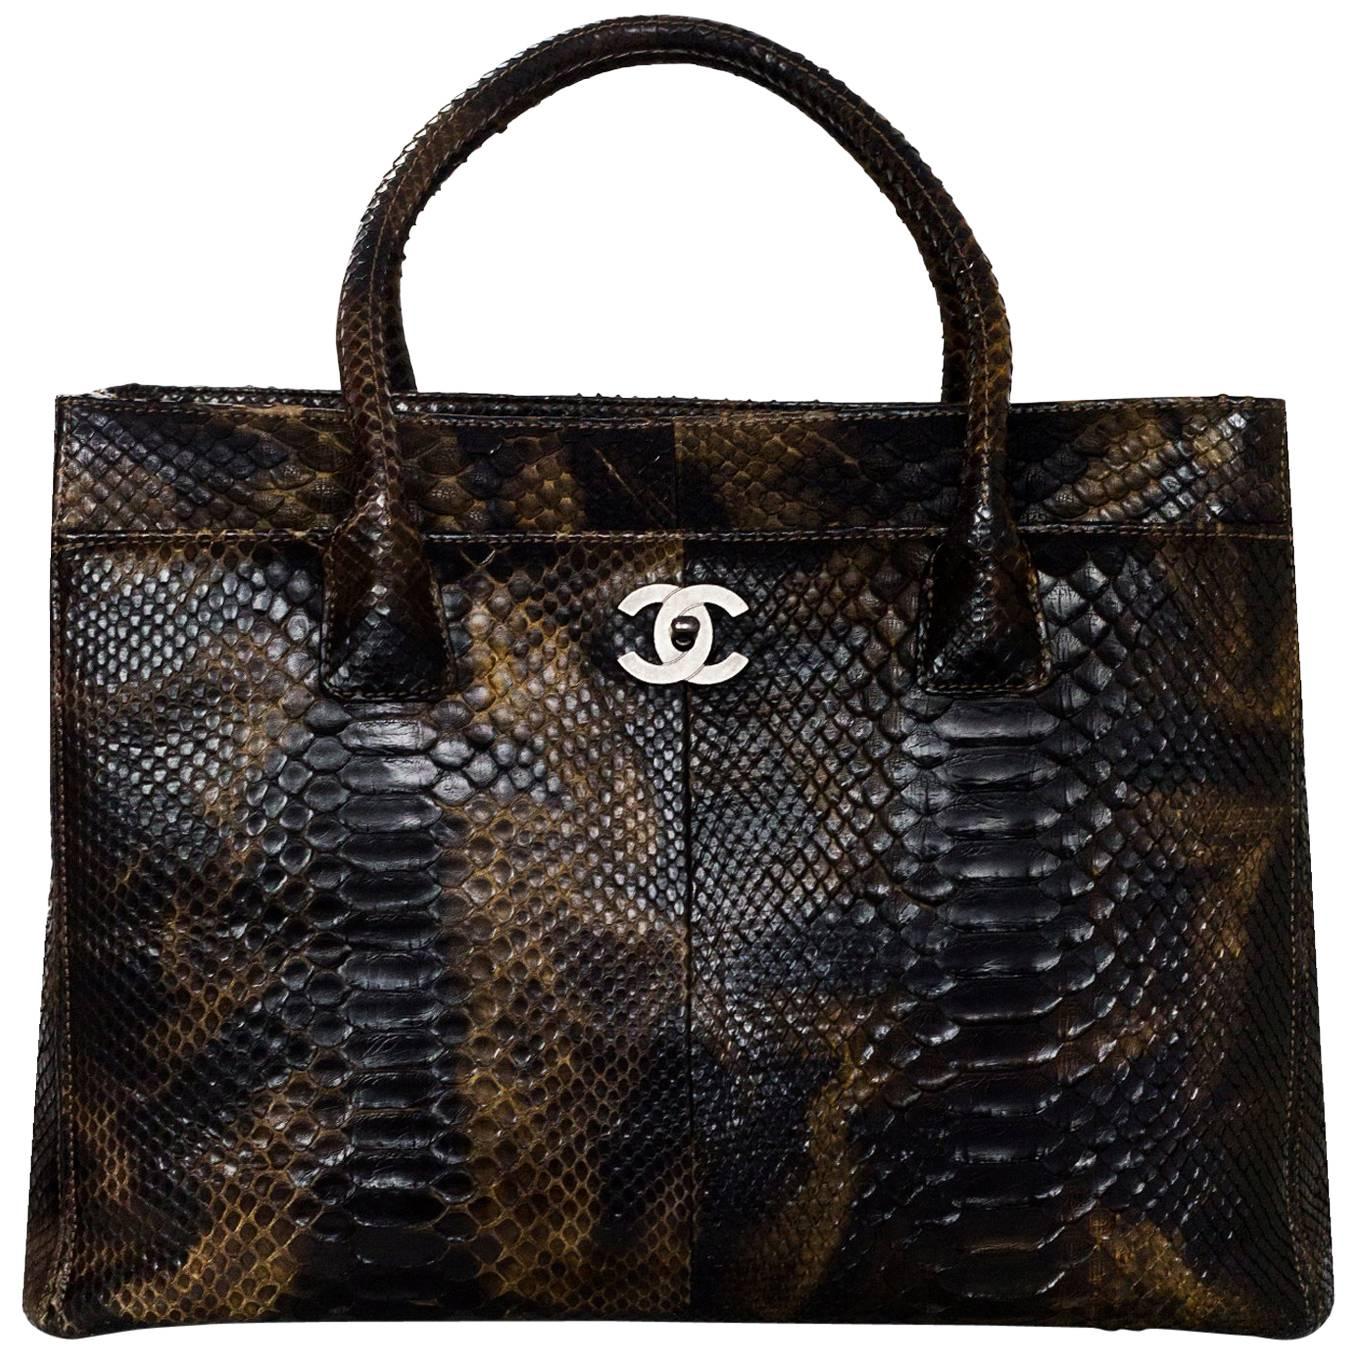 Chanel Dark Beige Python Executive Large Cerf Tote Bag